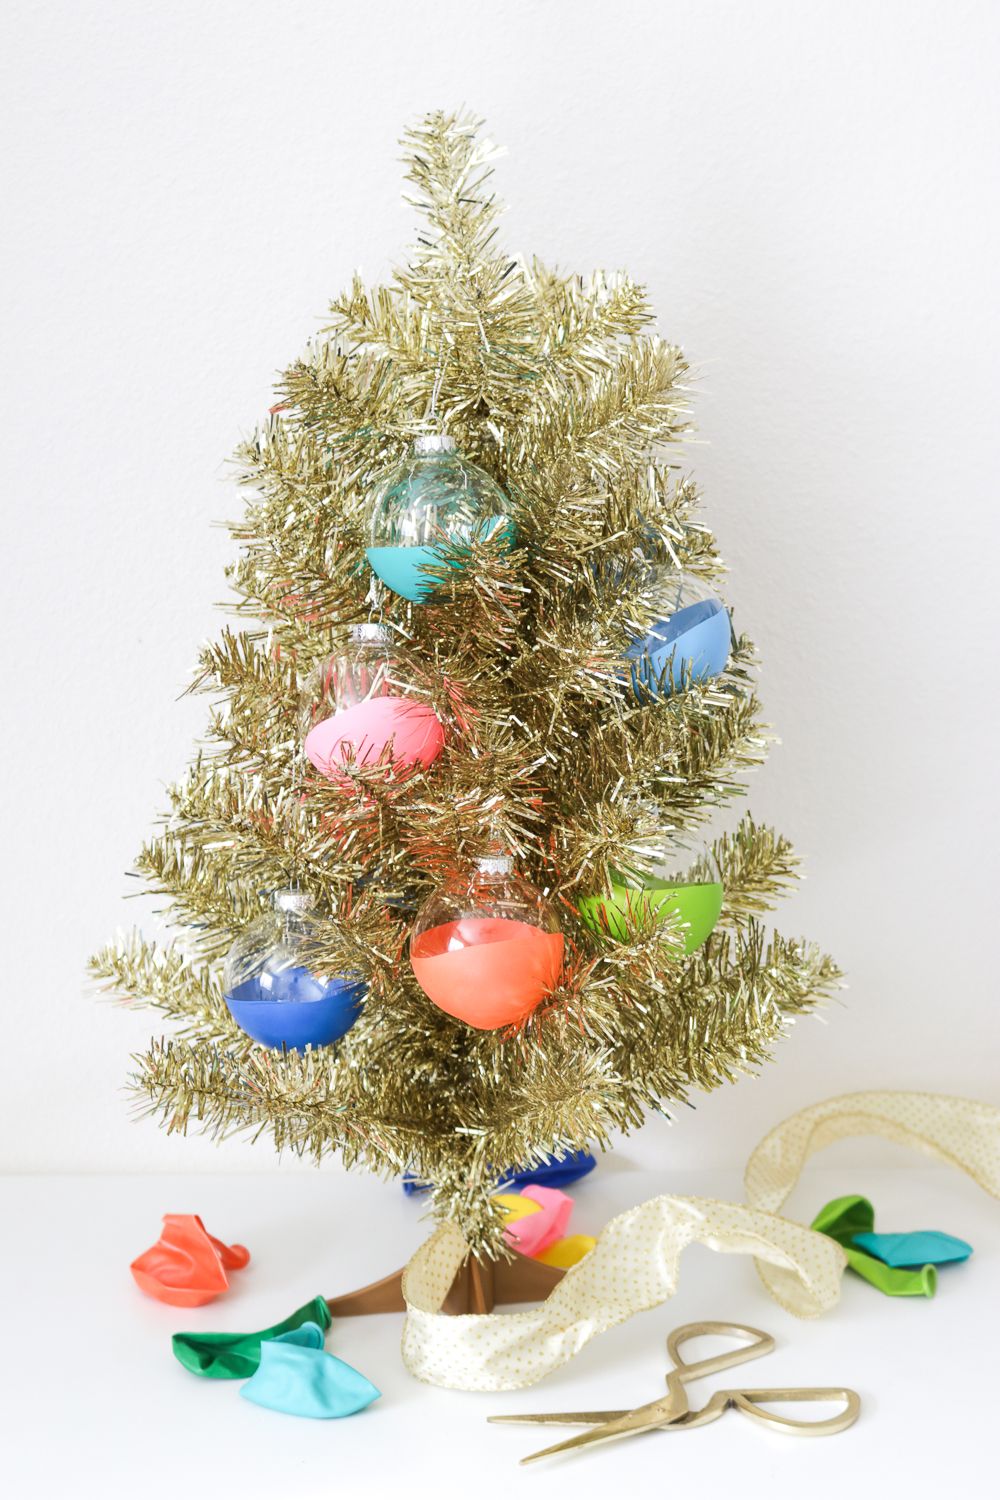 Christmas tree balls Xmas tree decorations Christmas ornaments in vintage style Home decor Christmas gift handmade